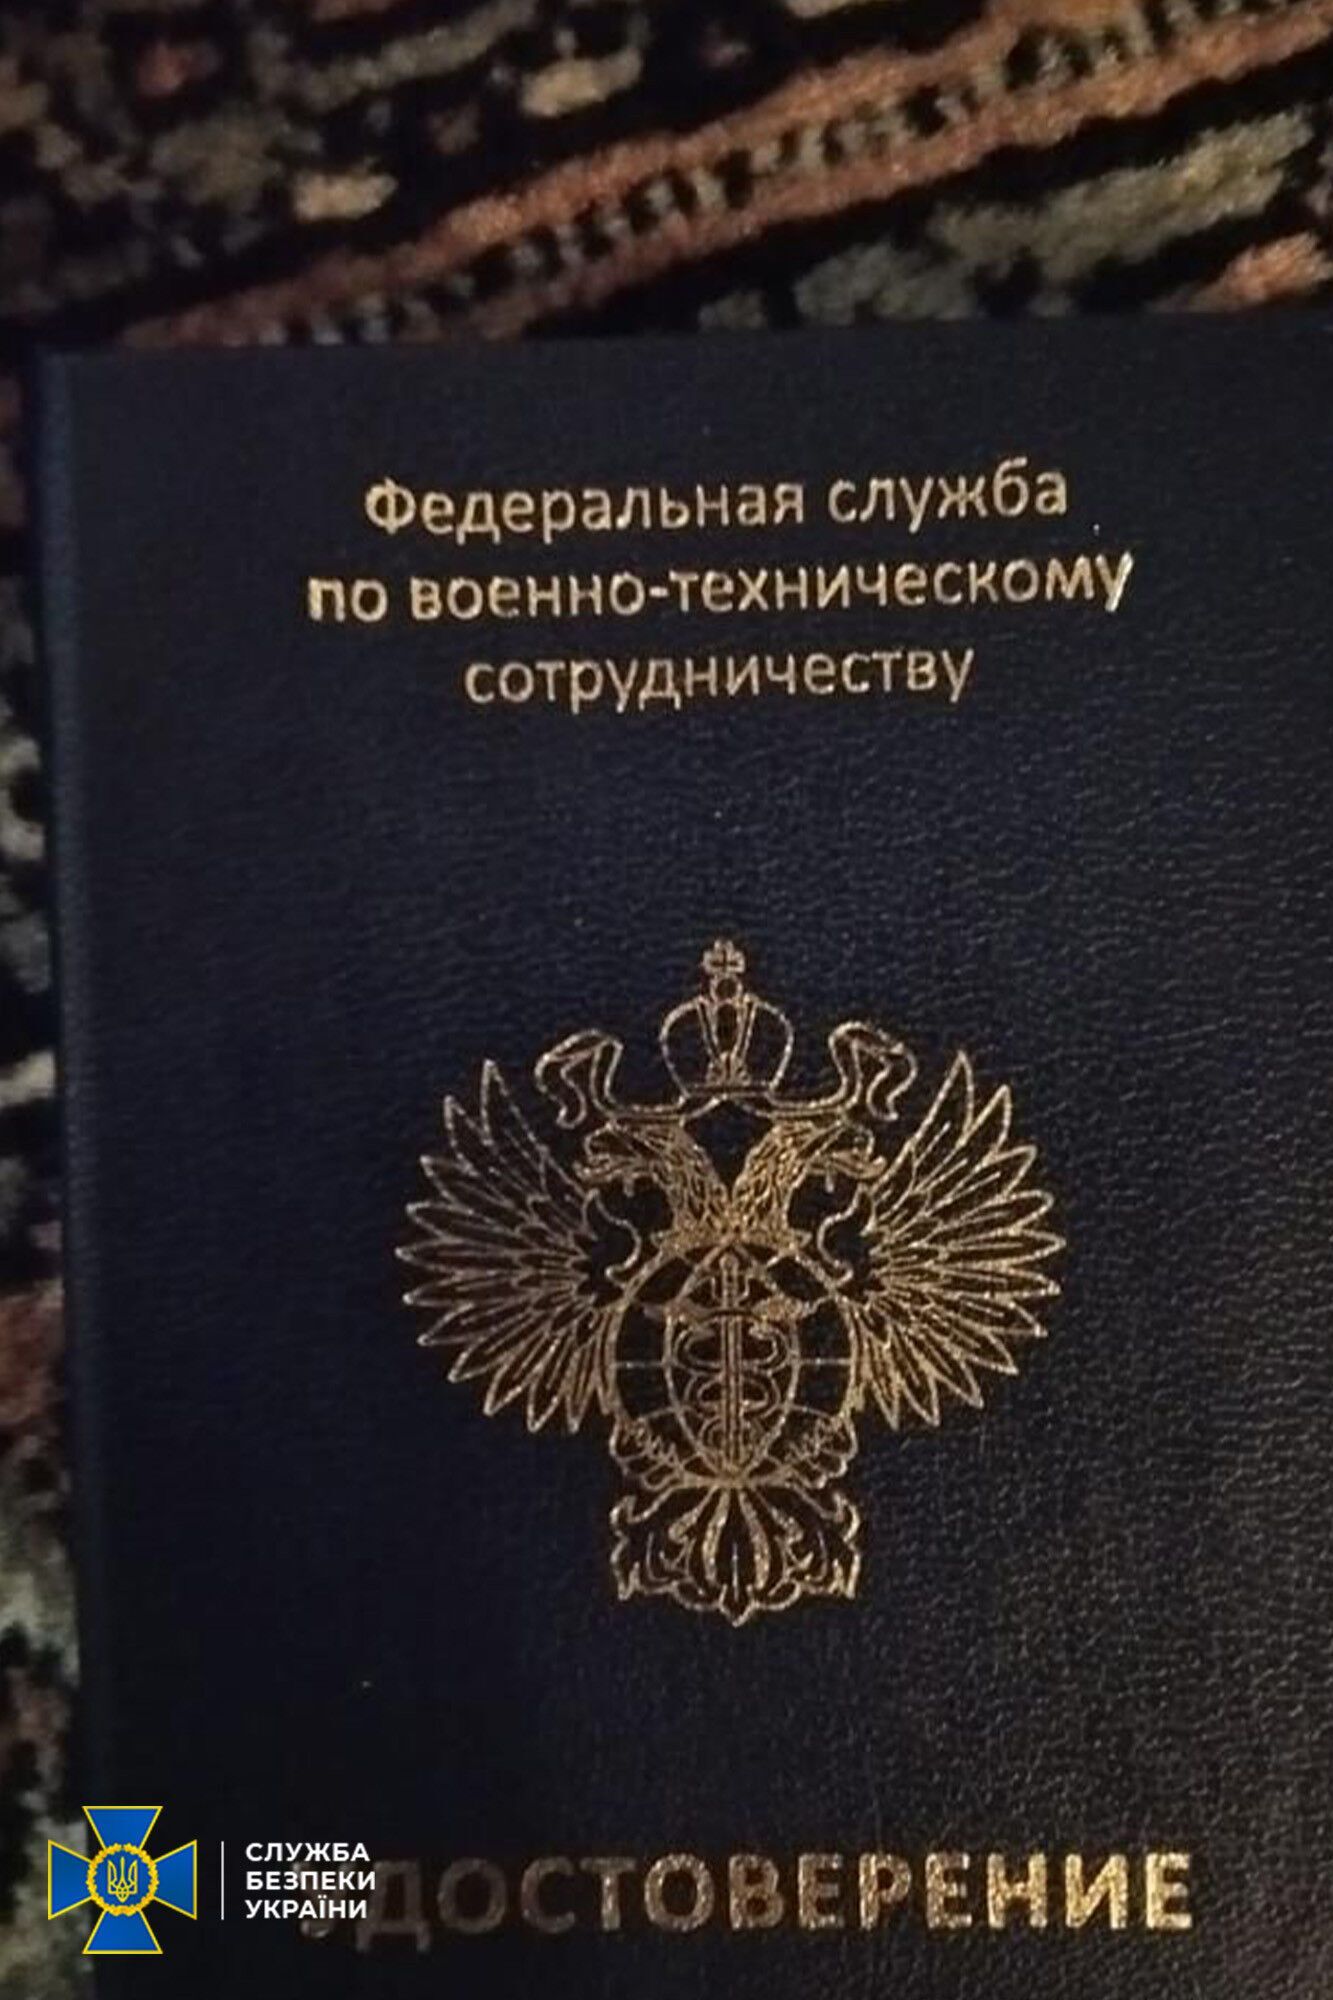 СБУ подтвердила задержание президента ''Мотор Сич'' Богуслаева по подозрению в госизмене: все детали